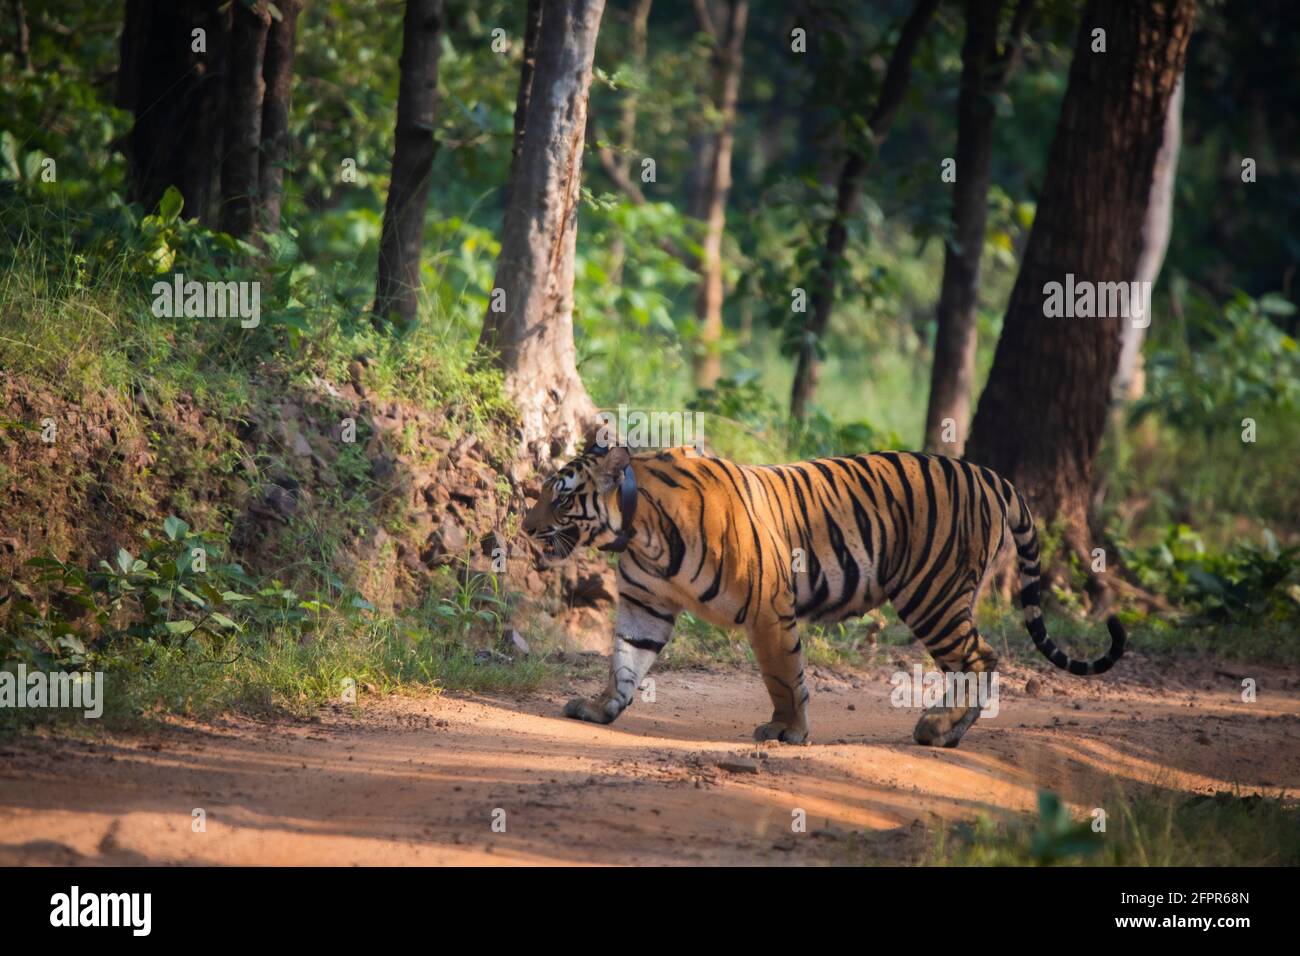 Tigre du Bengale royal, Panthera tigris, réserve de tigre Sanjay Dubri, Madhya Pradesh, Inde Banque D'Images